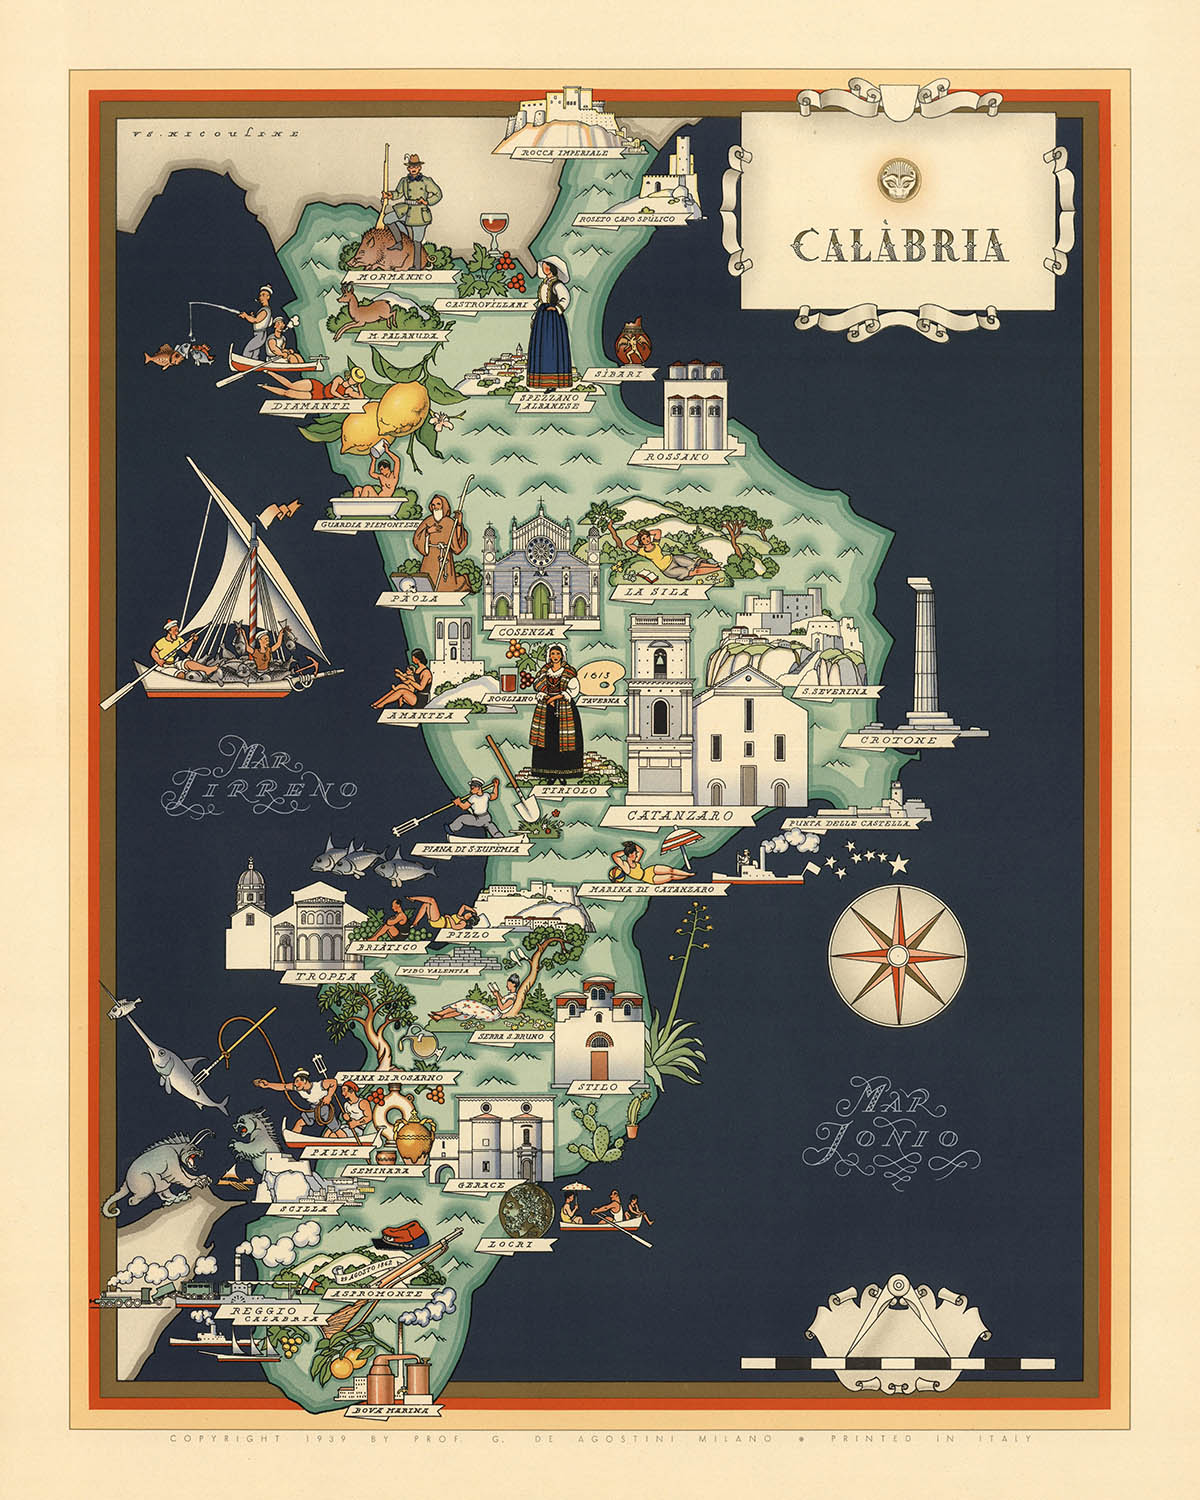 Old Pictorial Map of Calabria by De Agostini, 1938: Cosenza, Catanzaro, Reggio di Calabria, Pollino NP, Sila NP